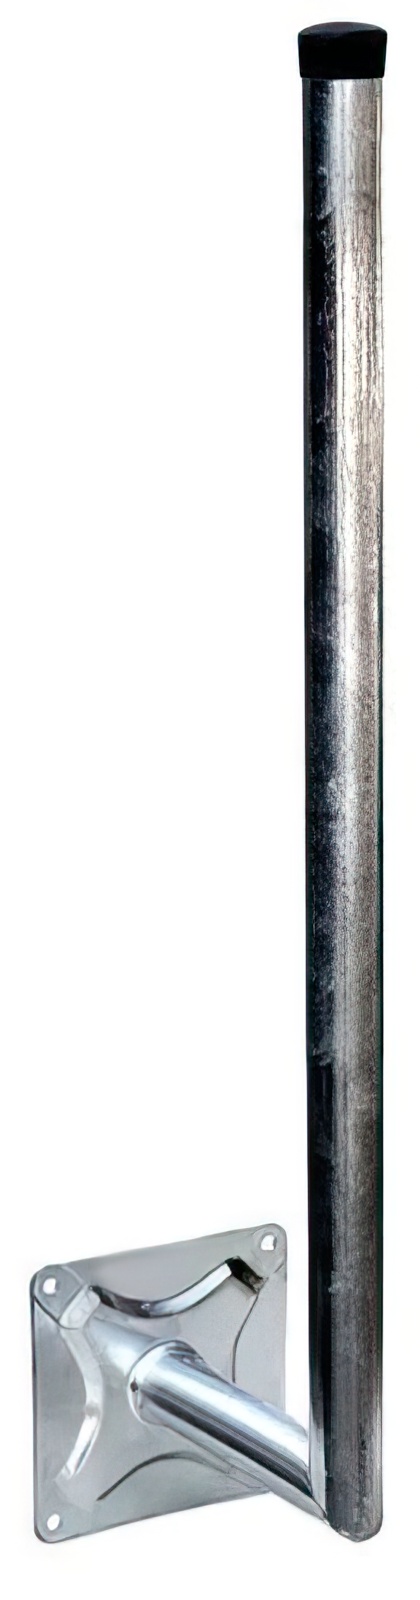 15cm Sat-Wandhalterung - XmediaSat XM-Line 050005 Achsmaß: 15 cm H: 100 cm Ø: 48 mm feuerverzinkt rostfrei